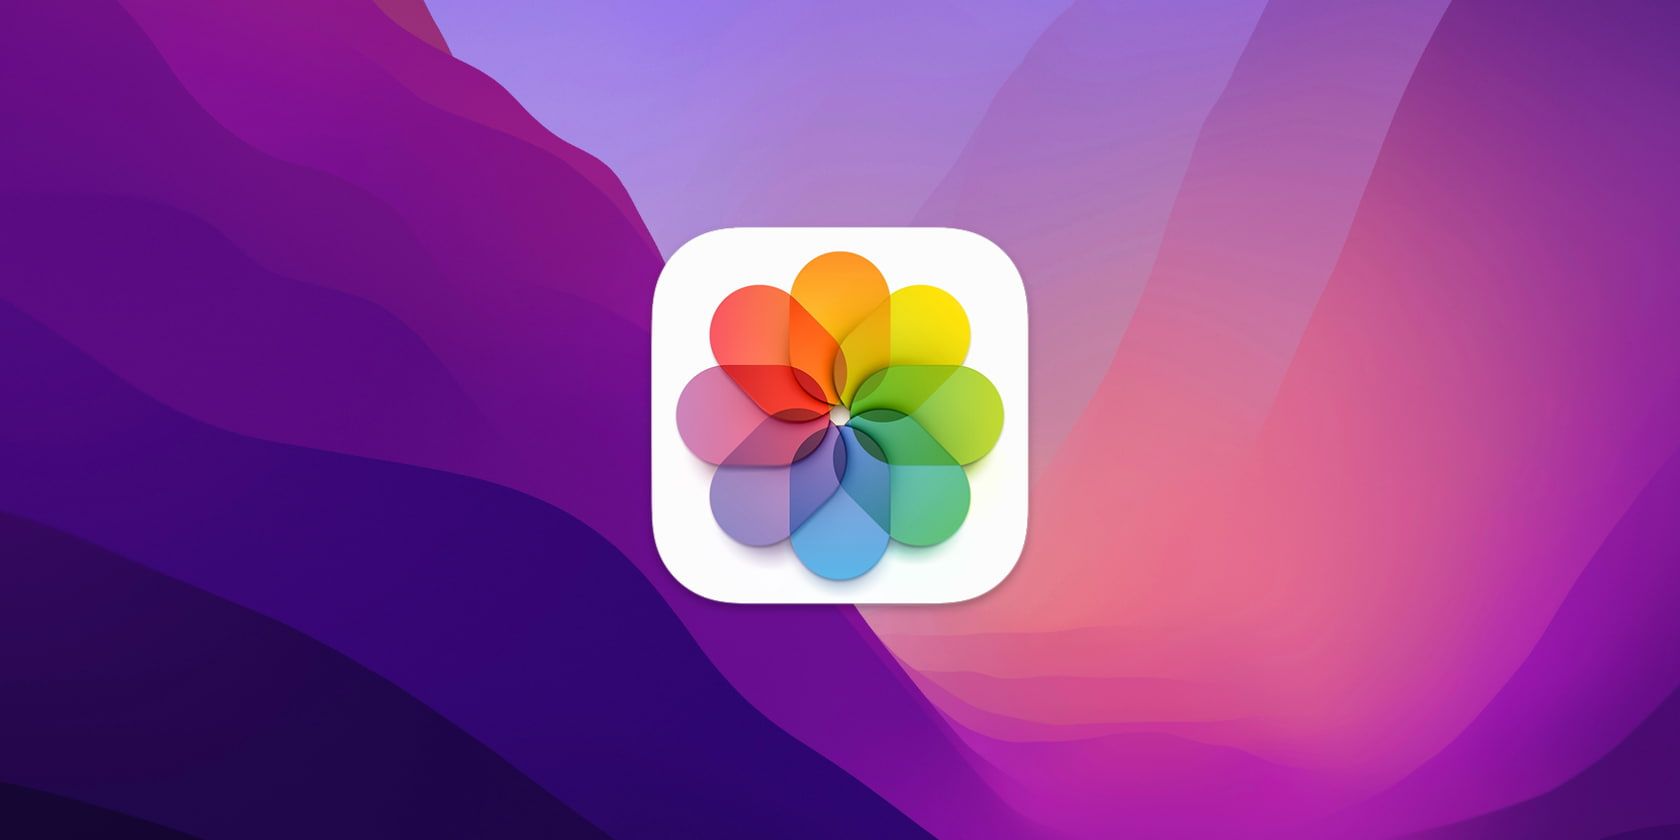 Mac Photos app icon on macOS Monterey wallpaper background